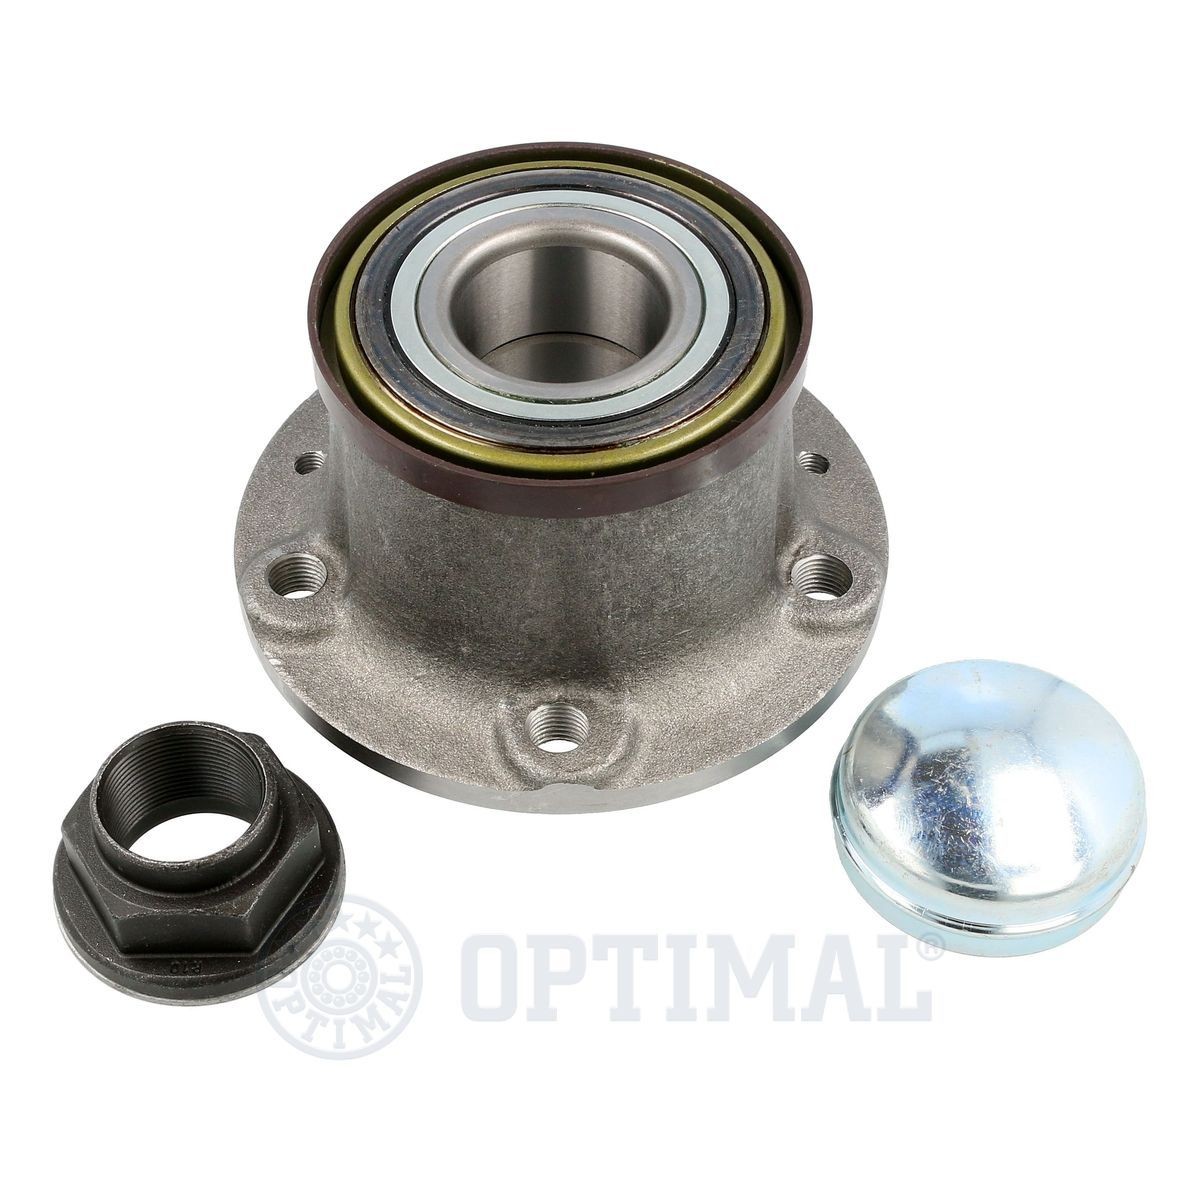 OPTIMAL 602973 Wheel bearing kit with integrated magnetic sensor ring, 143 mm